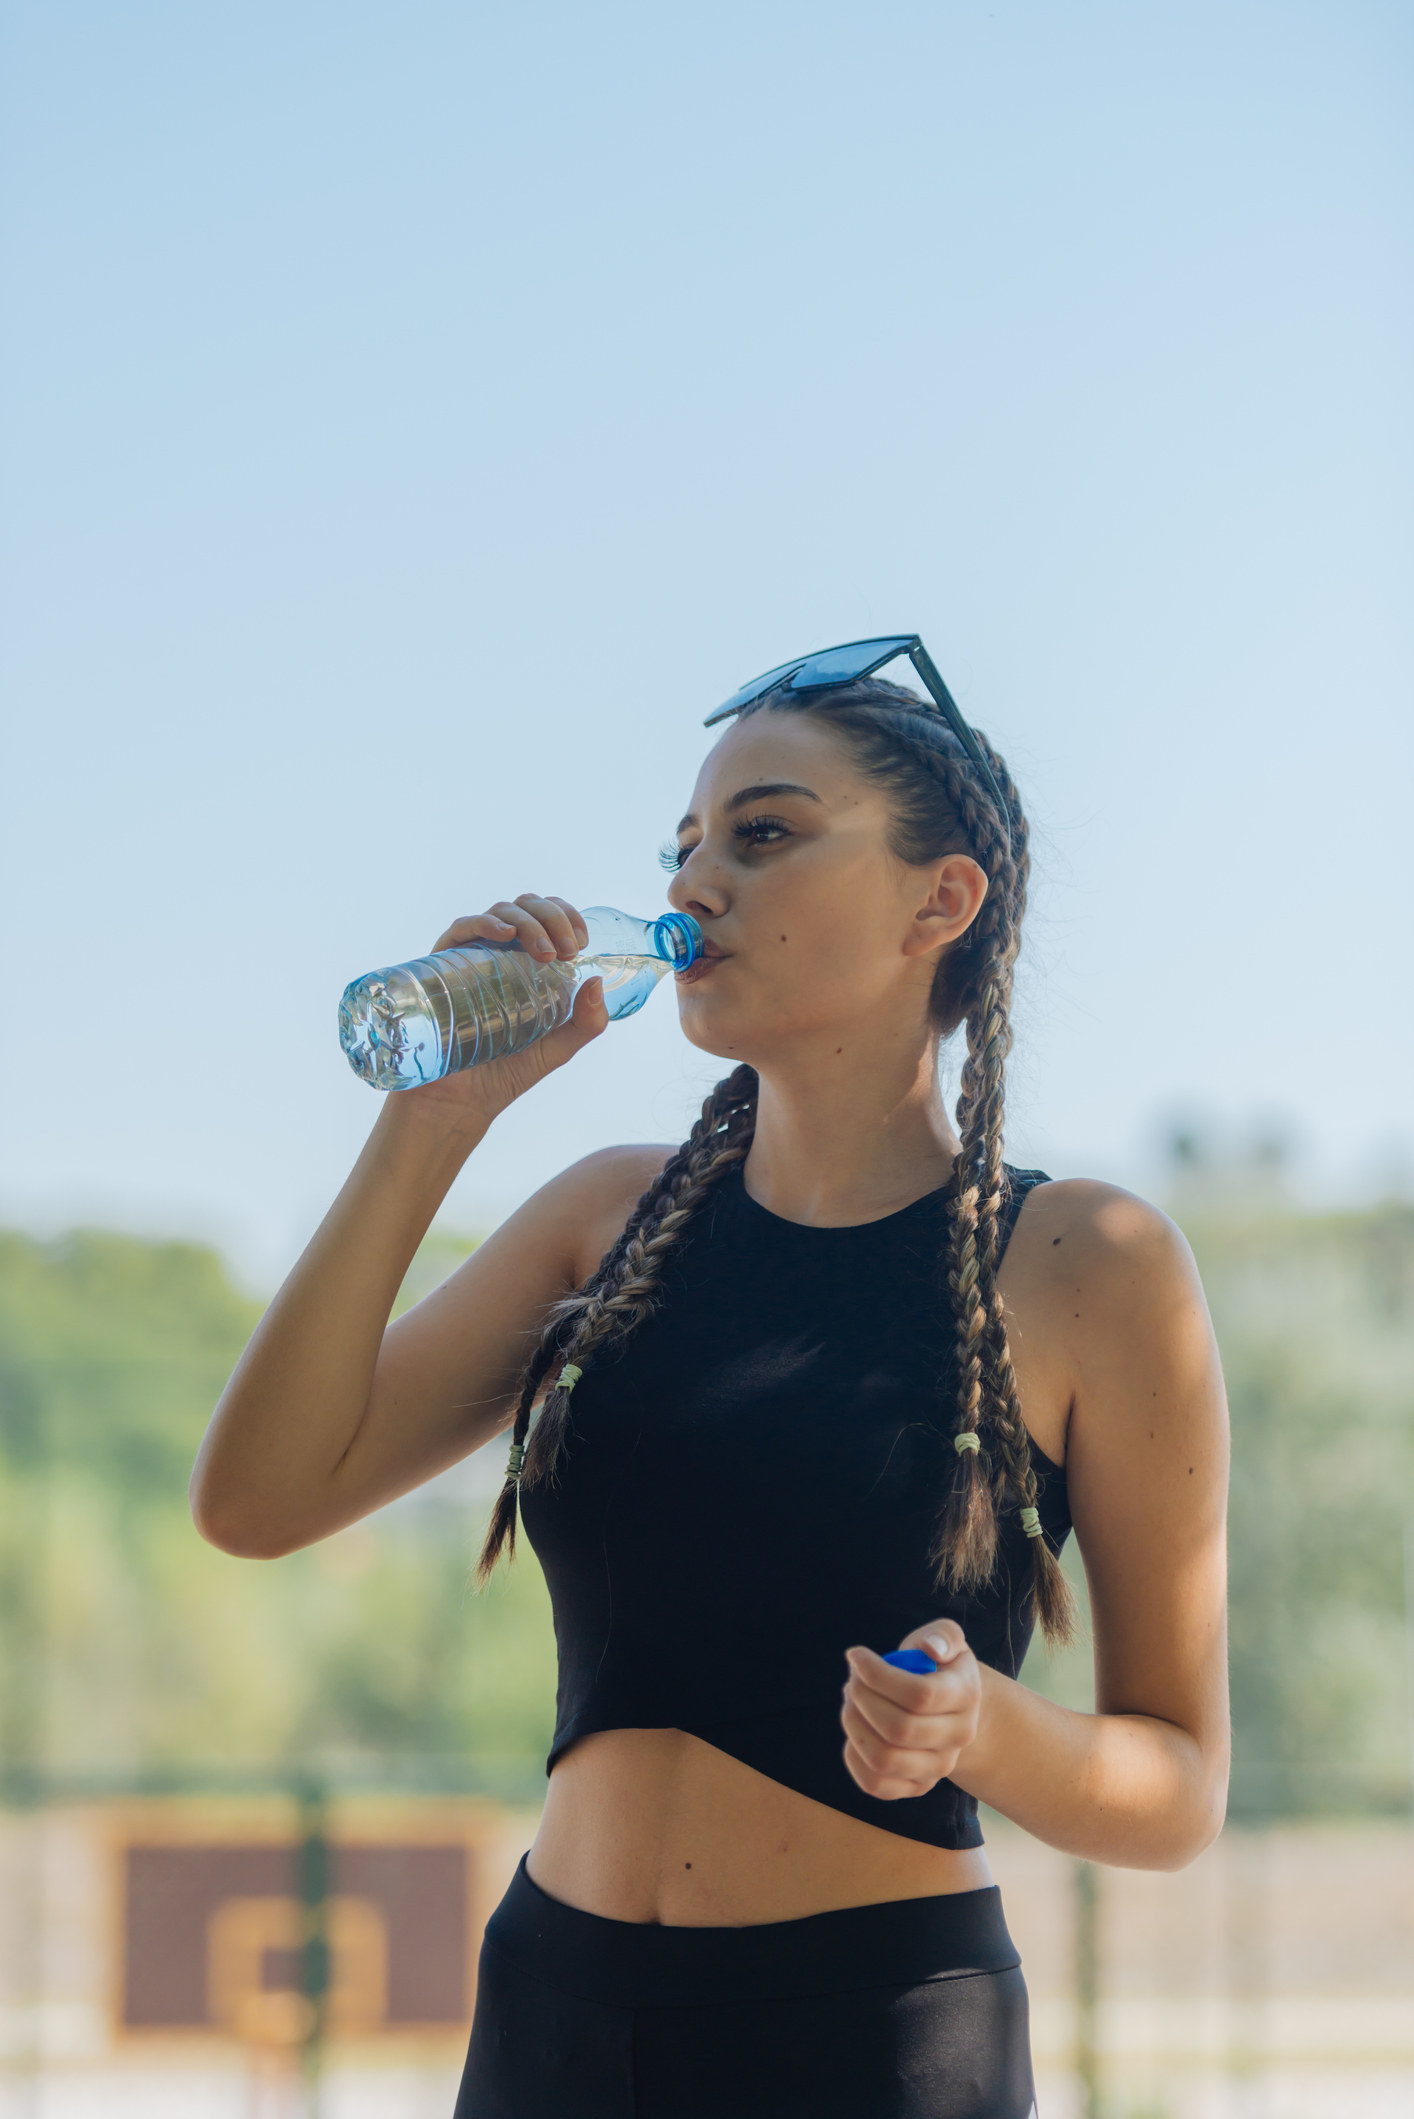 A woman drinks water outside